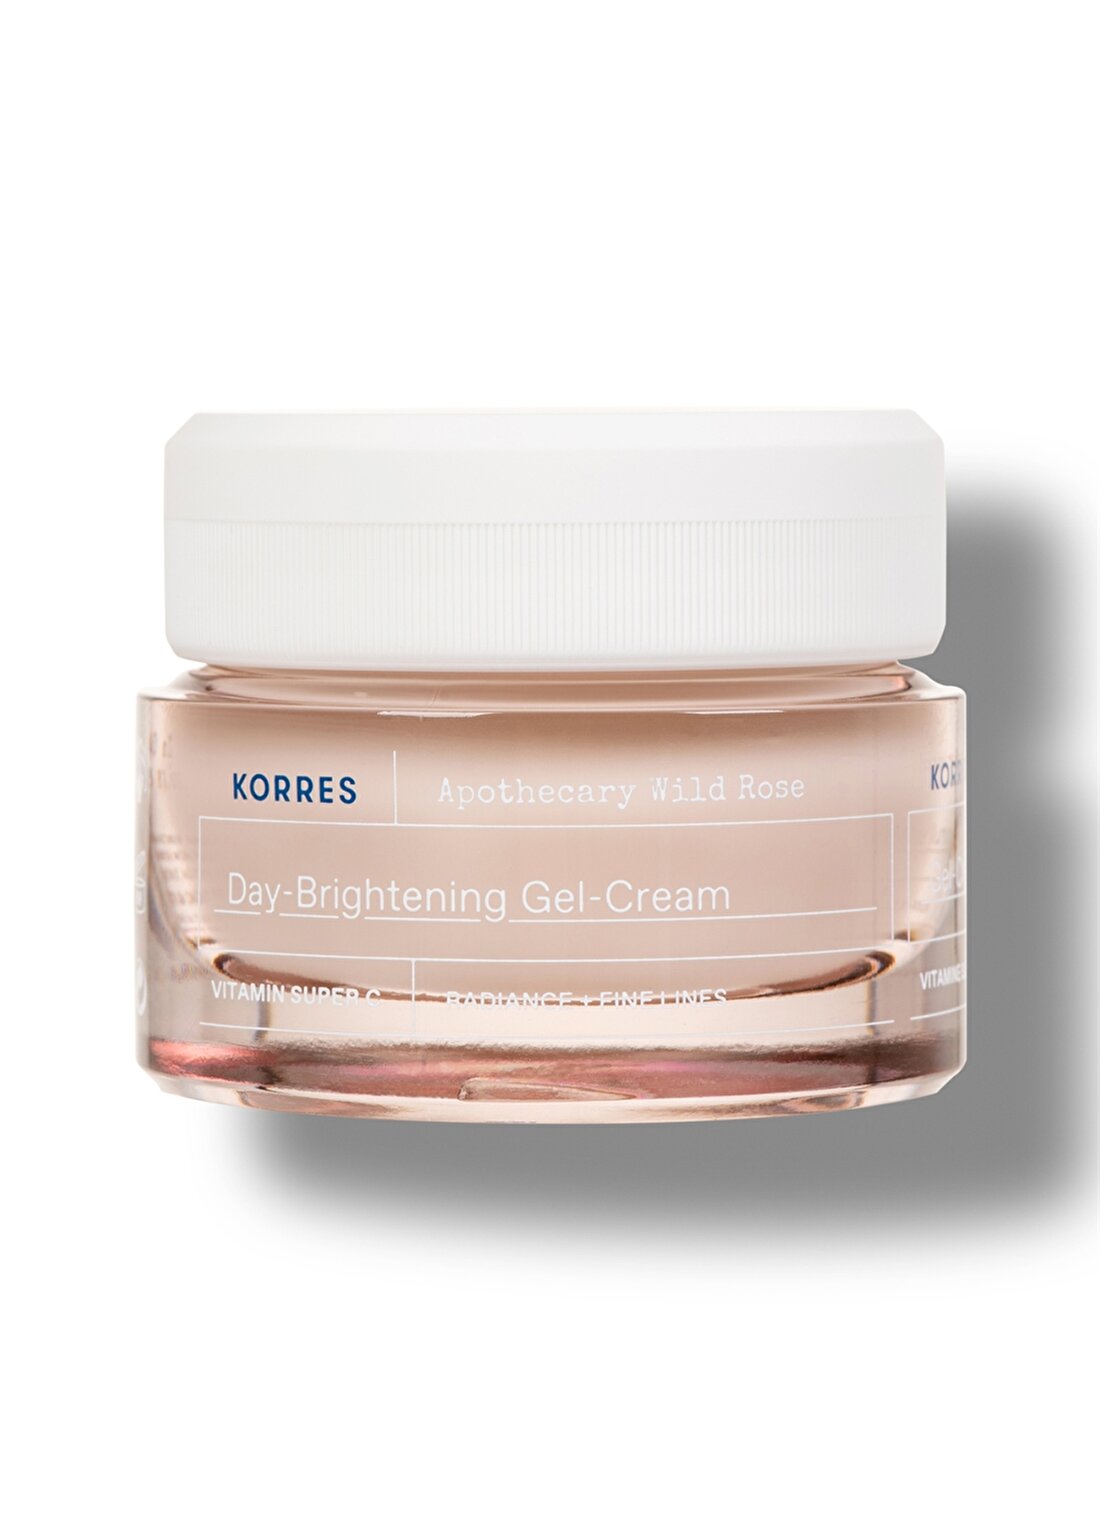 Korres Apothecary Wild Rose Day-Brightening Gel-Cream 40Ml [Normal-Combination Skin]